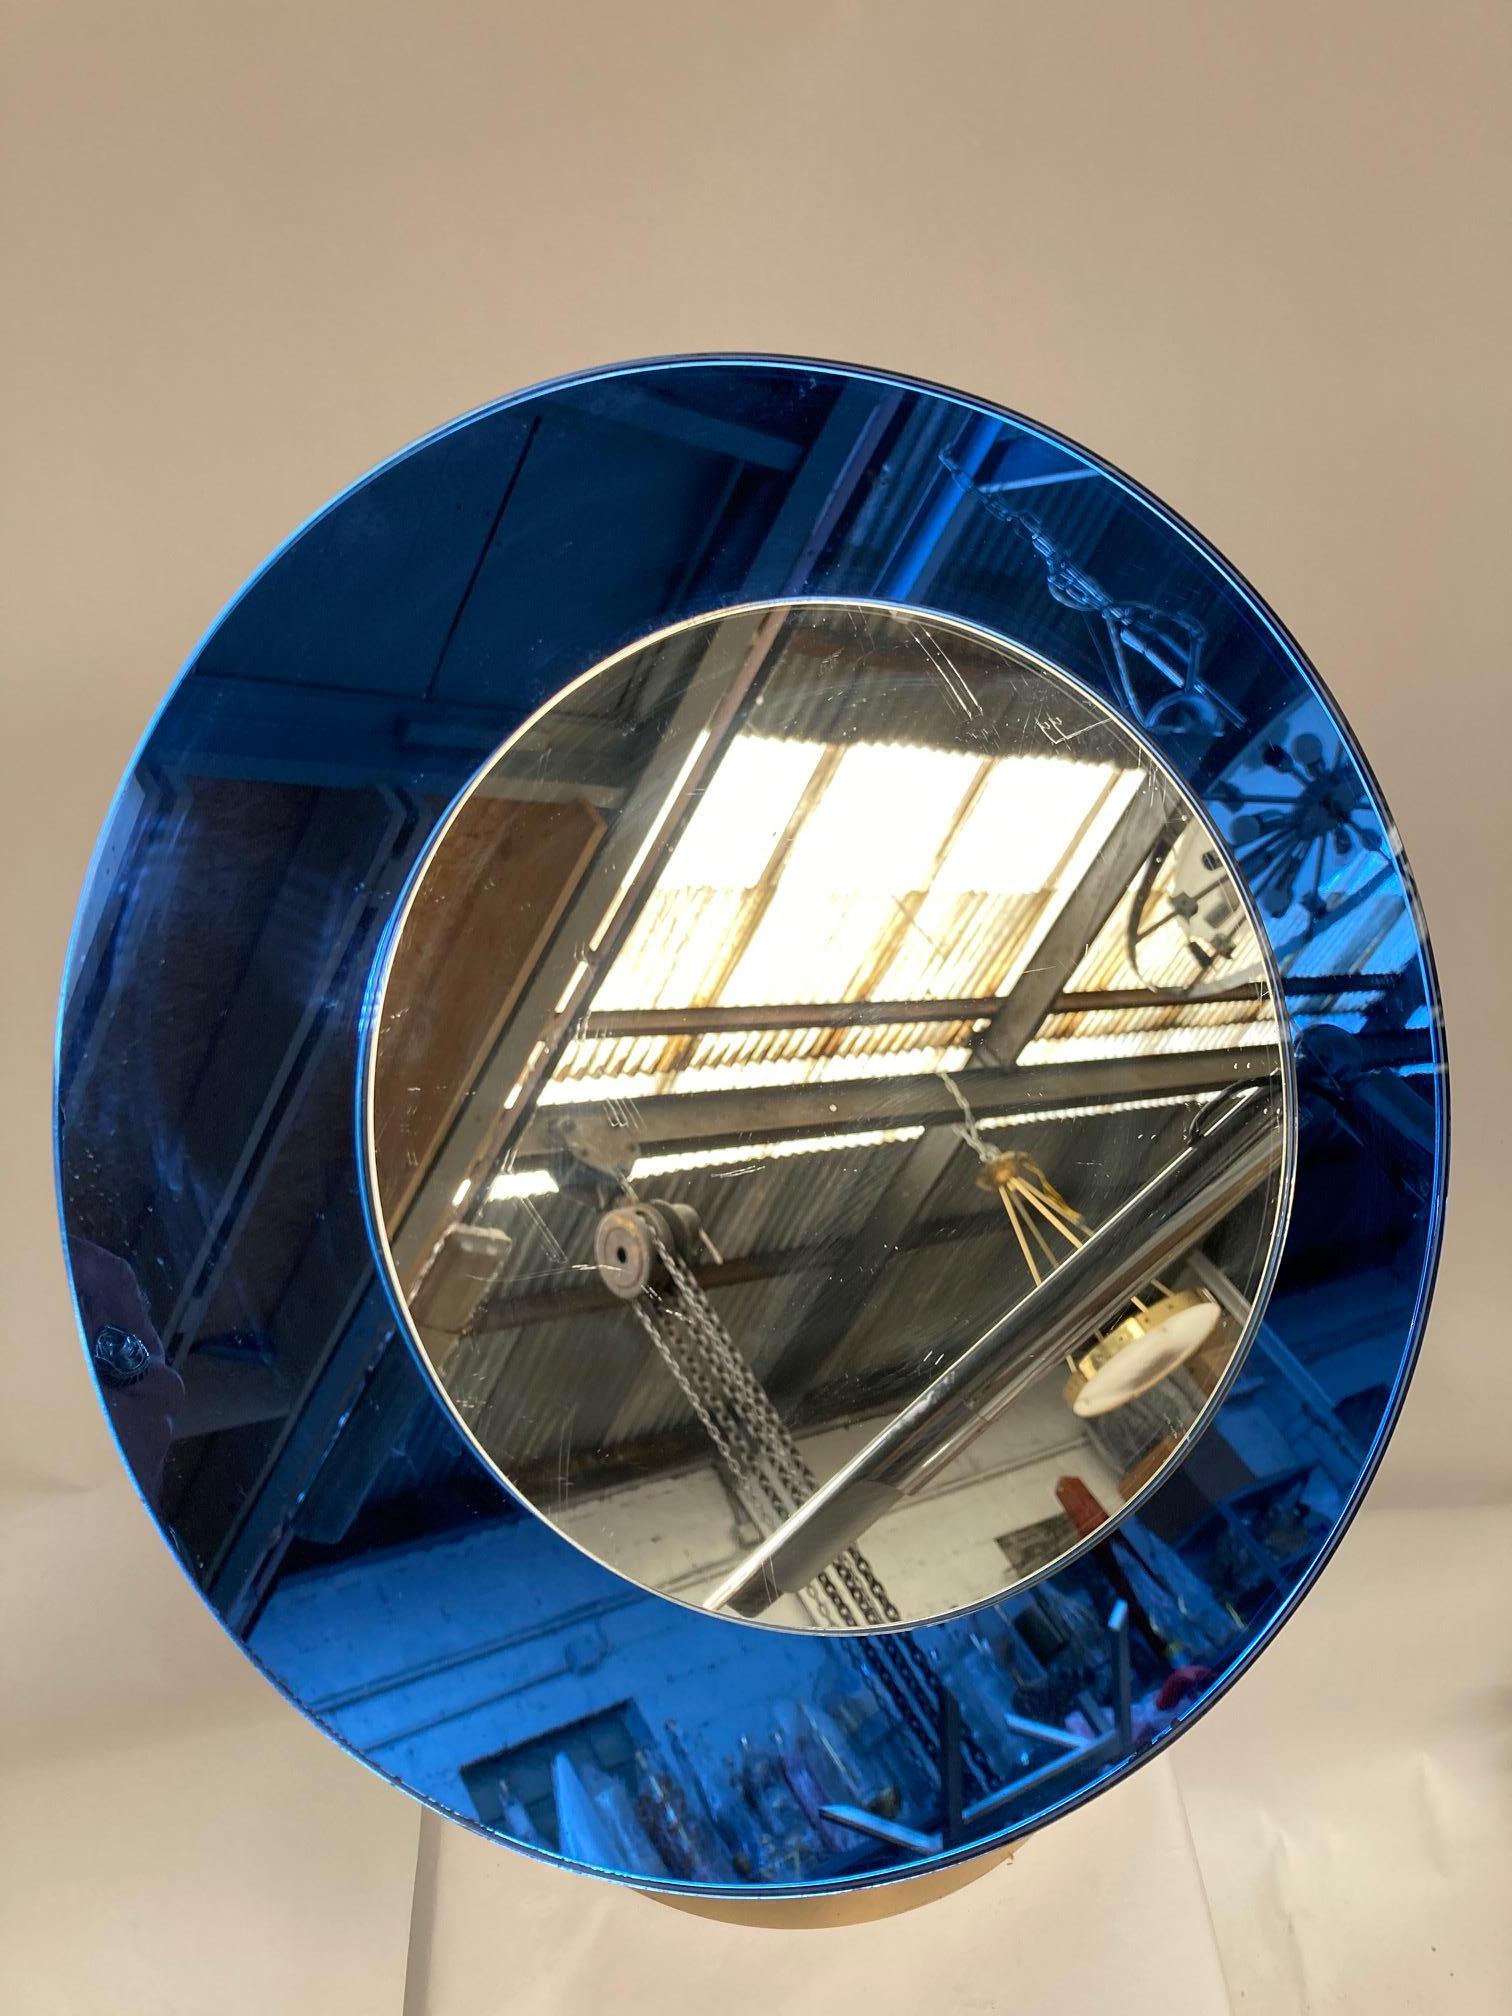 1950s Table mirror by Fontana Arte
Blue glass
Italy.